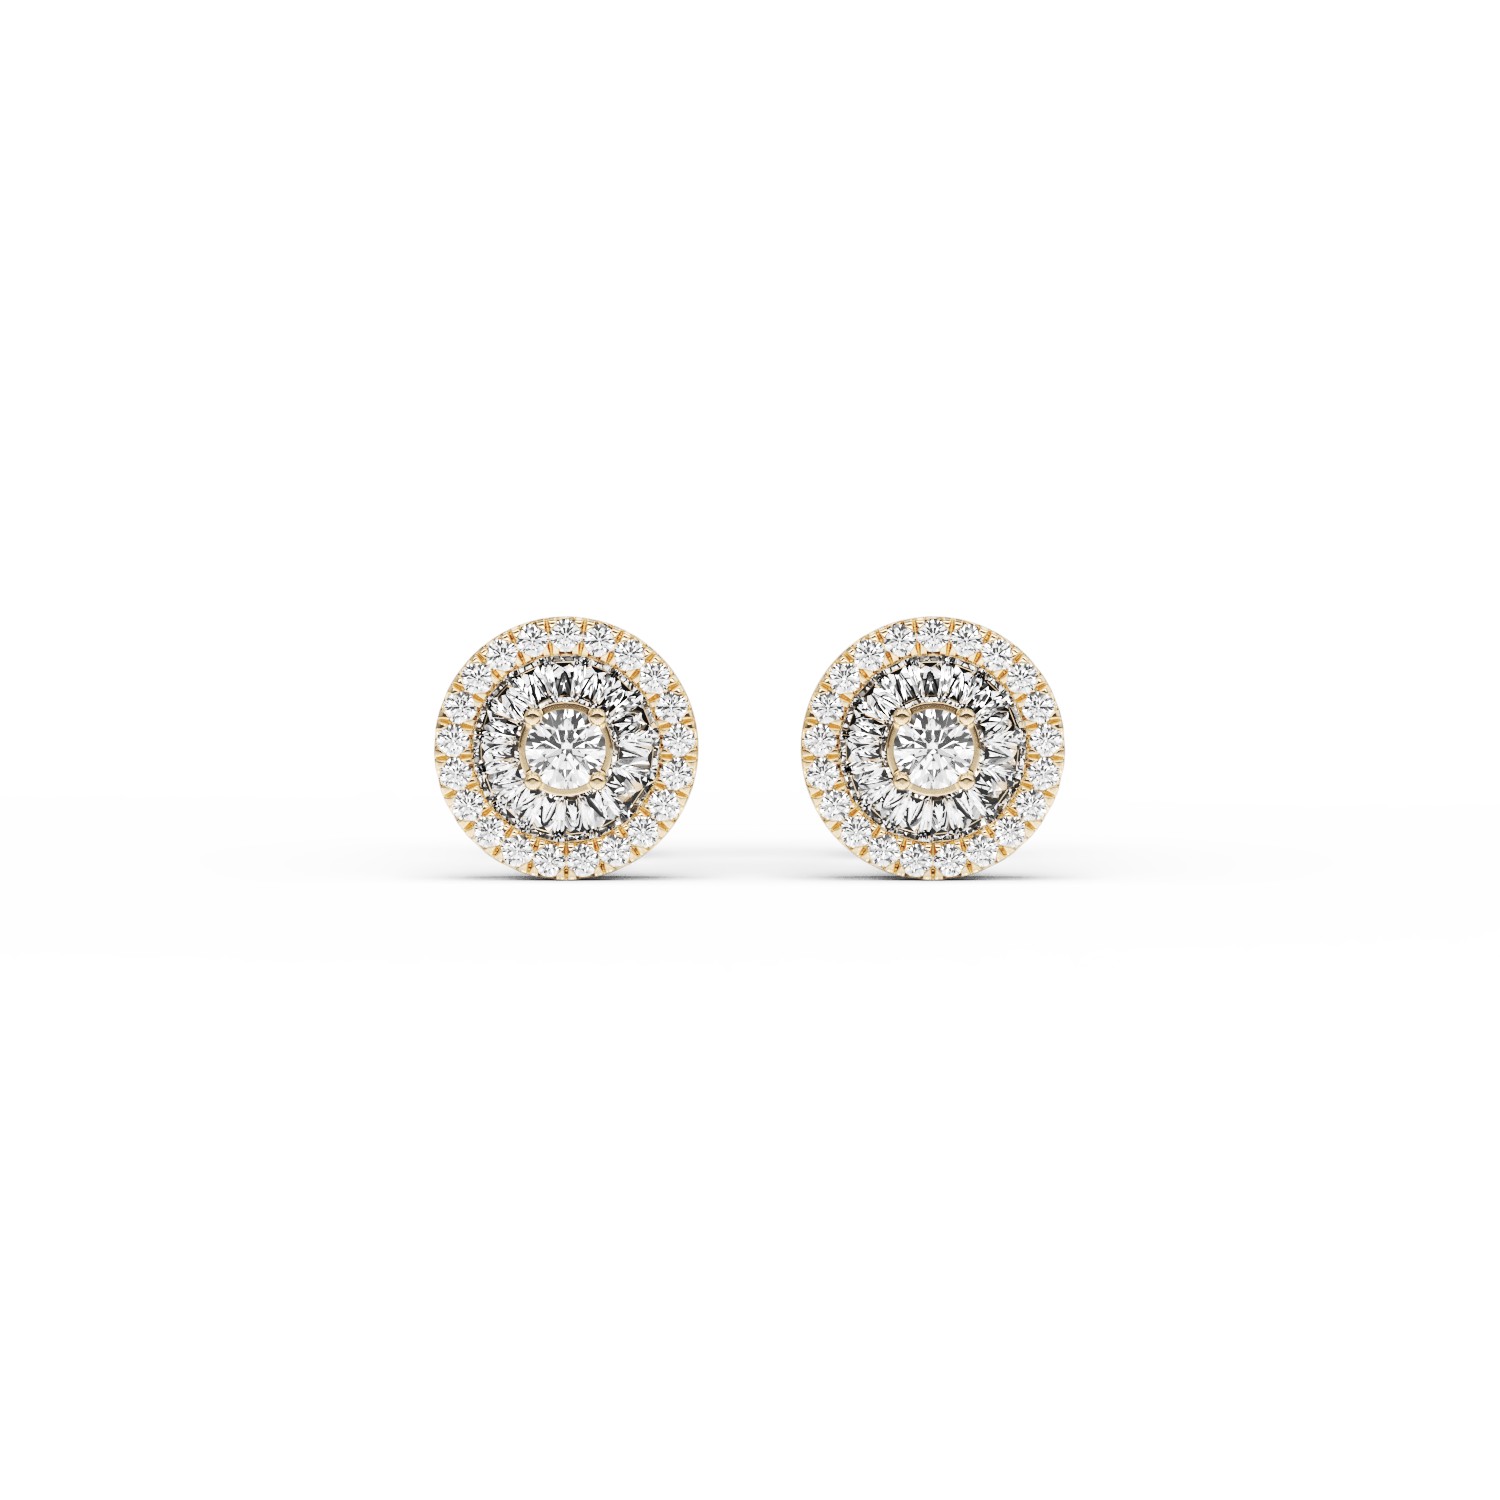 18K yellow gold earrings with 0.36ct diamonds